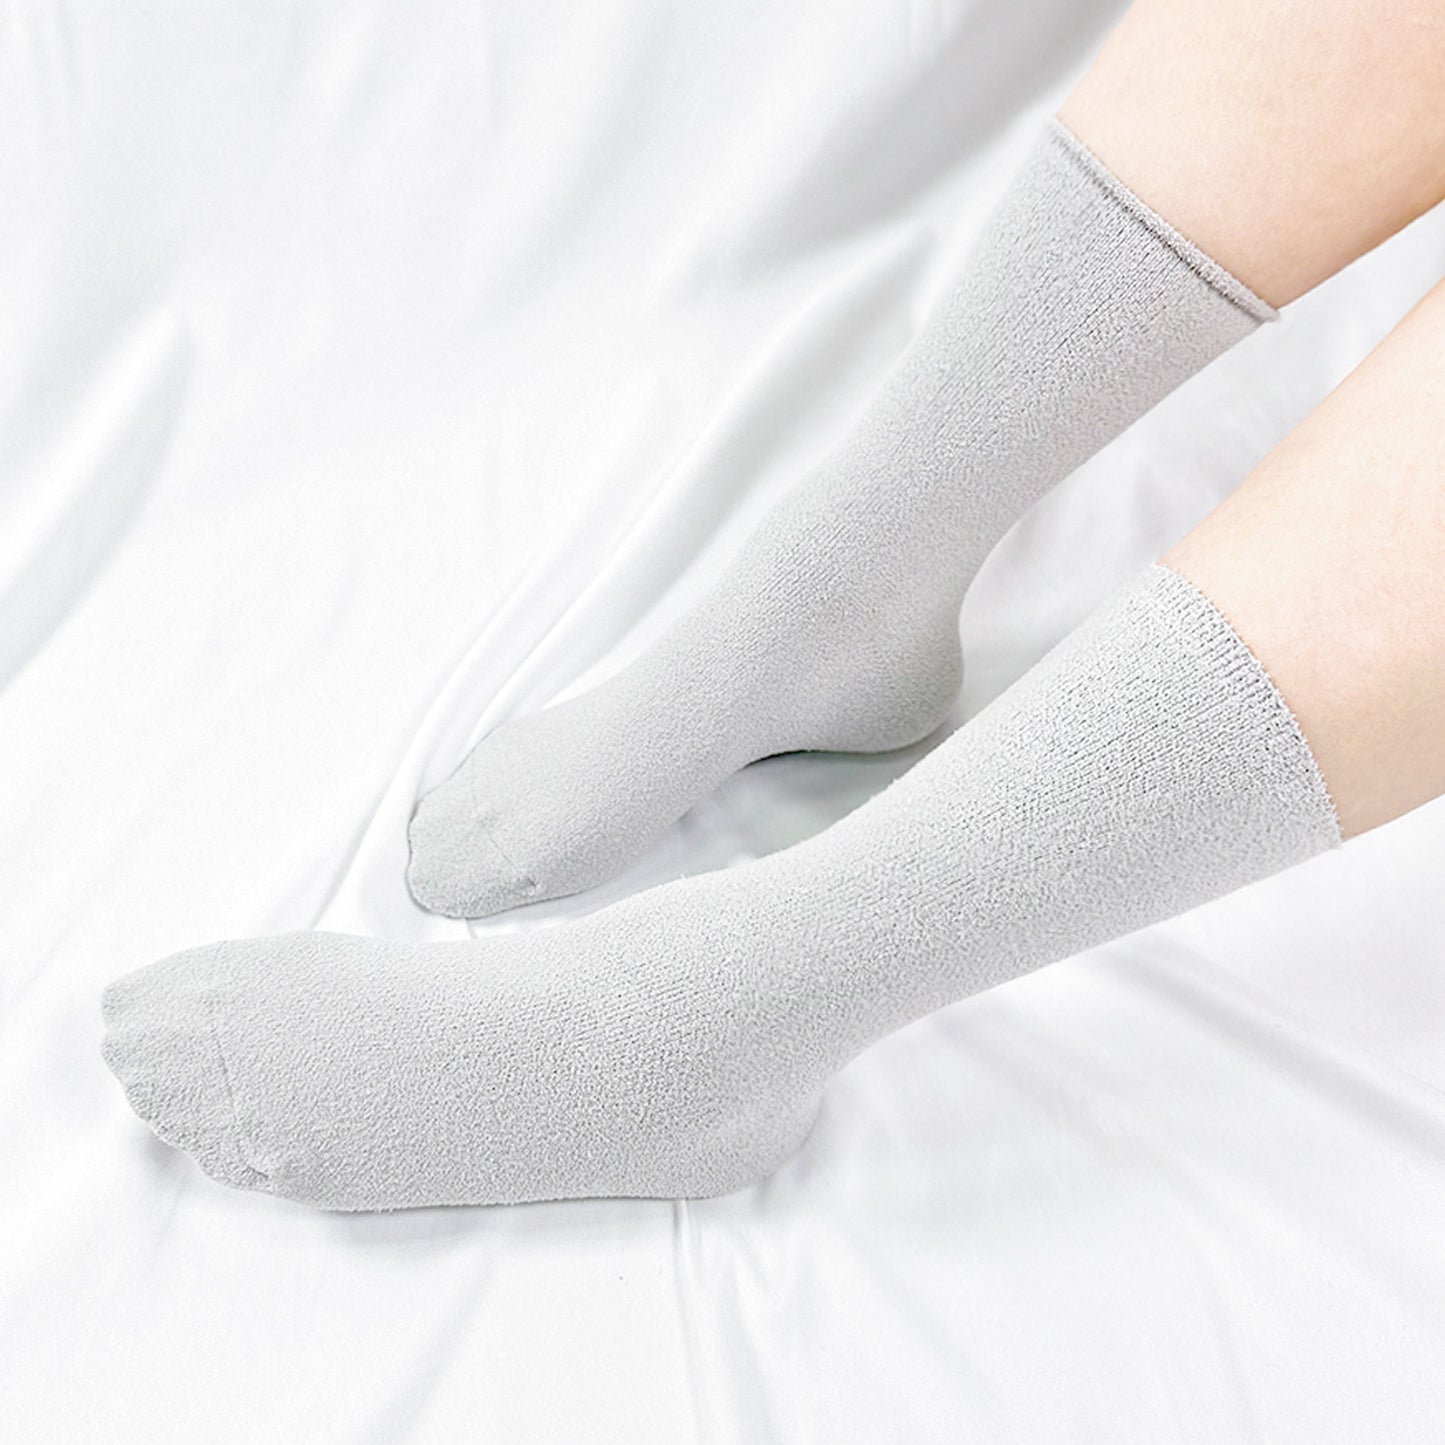 Women's Crew Sleep Plush Cozy Comfy Socks